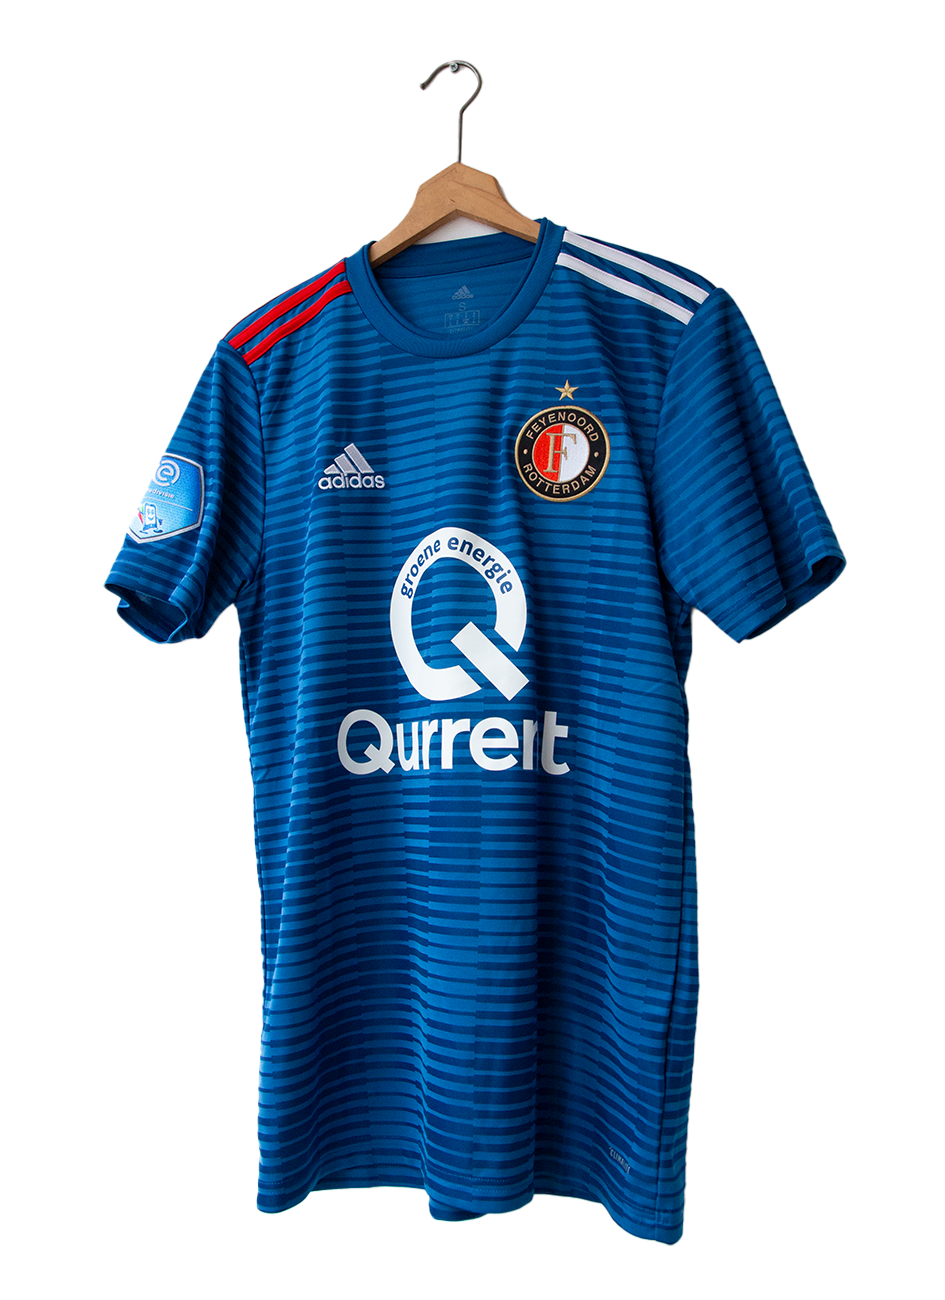 Feyenoord Rotterdam Away Shirt 2018-2019 Van Persie #32